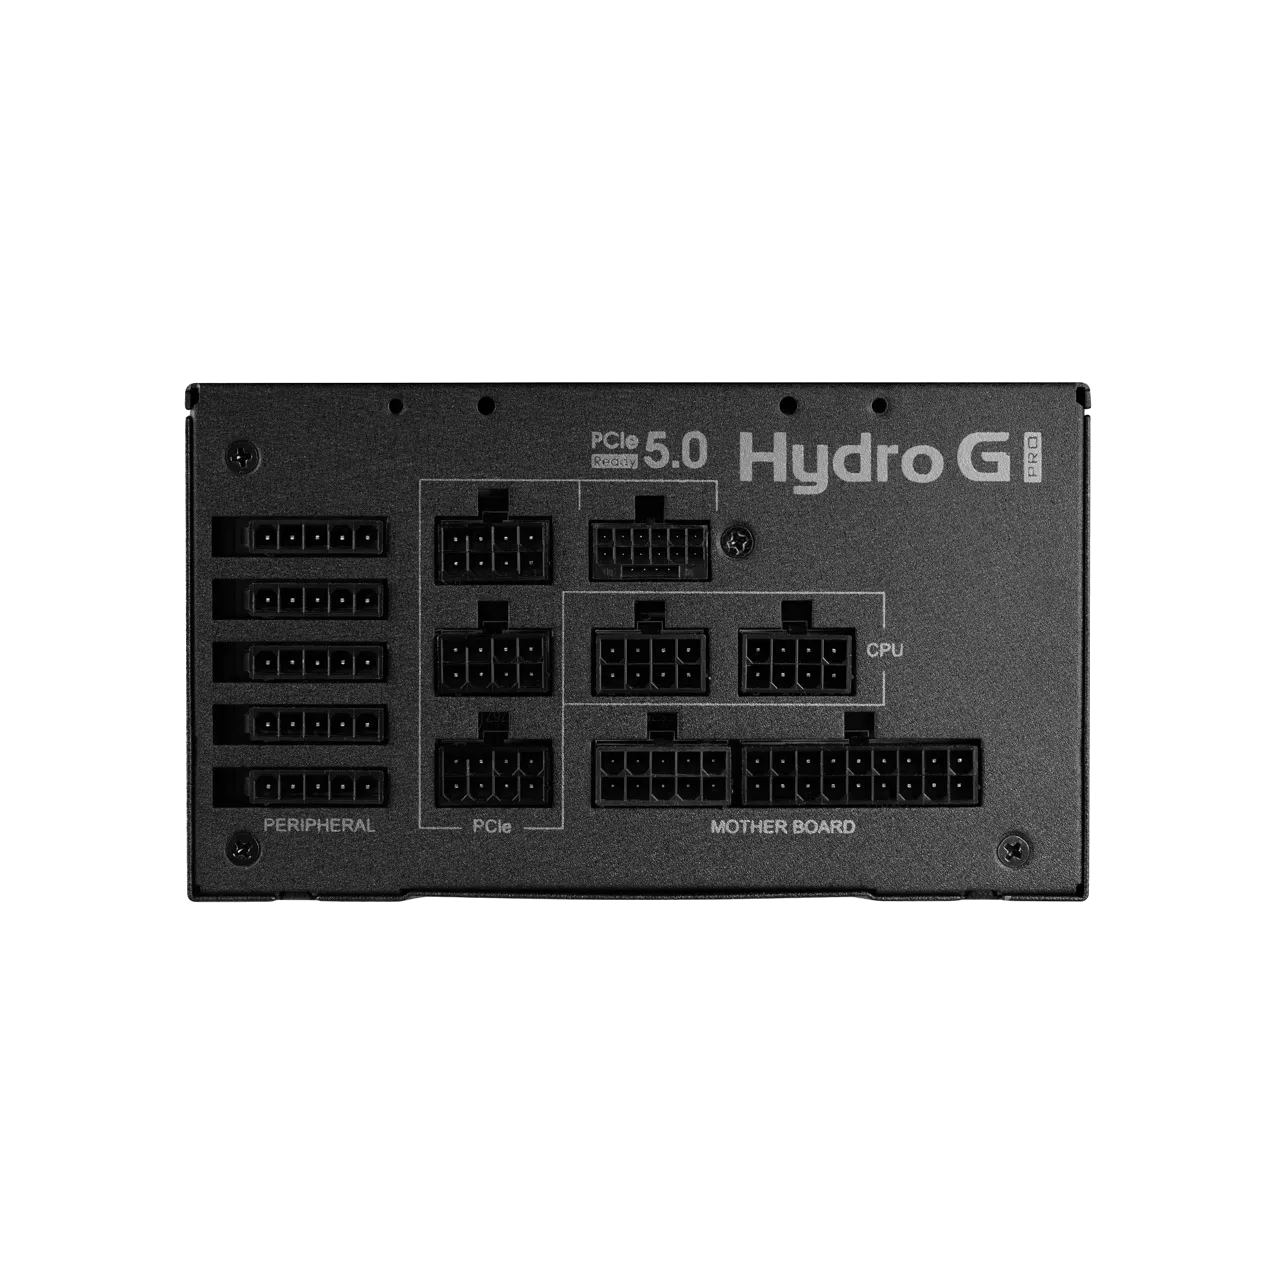 FSP Hydro G Pro 850W 80+ Gold (PCIe 5.0) Fully Modular Power Supply